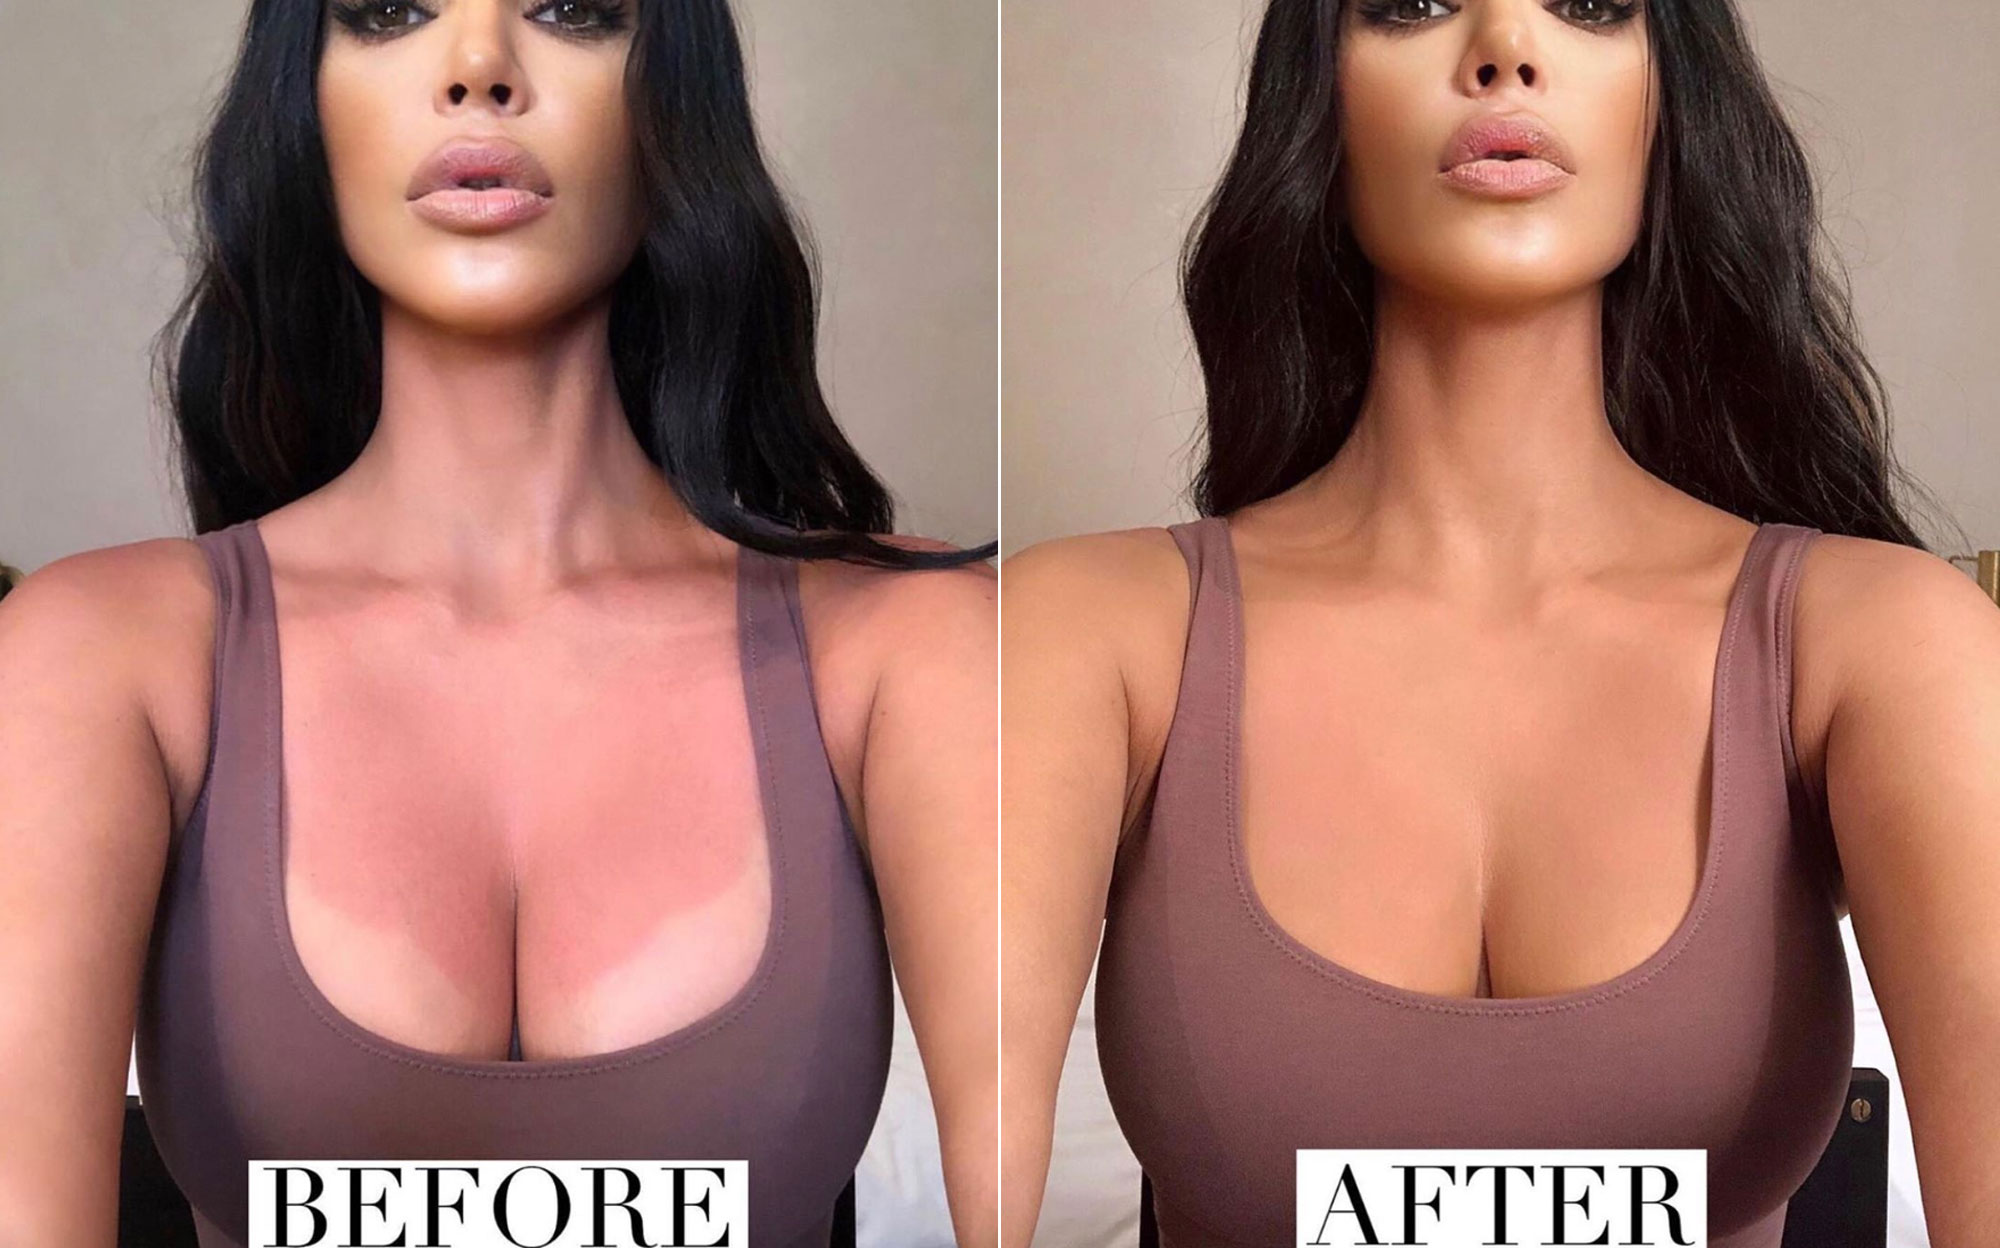 https://www.usmagazine.com/wp-content/uploads/2019/07/Kim-Kardashian-Body-Makeup-Feature.jpg?quality=86&strip=all